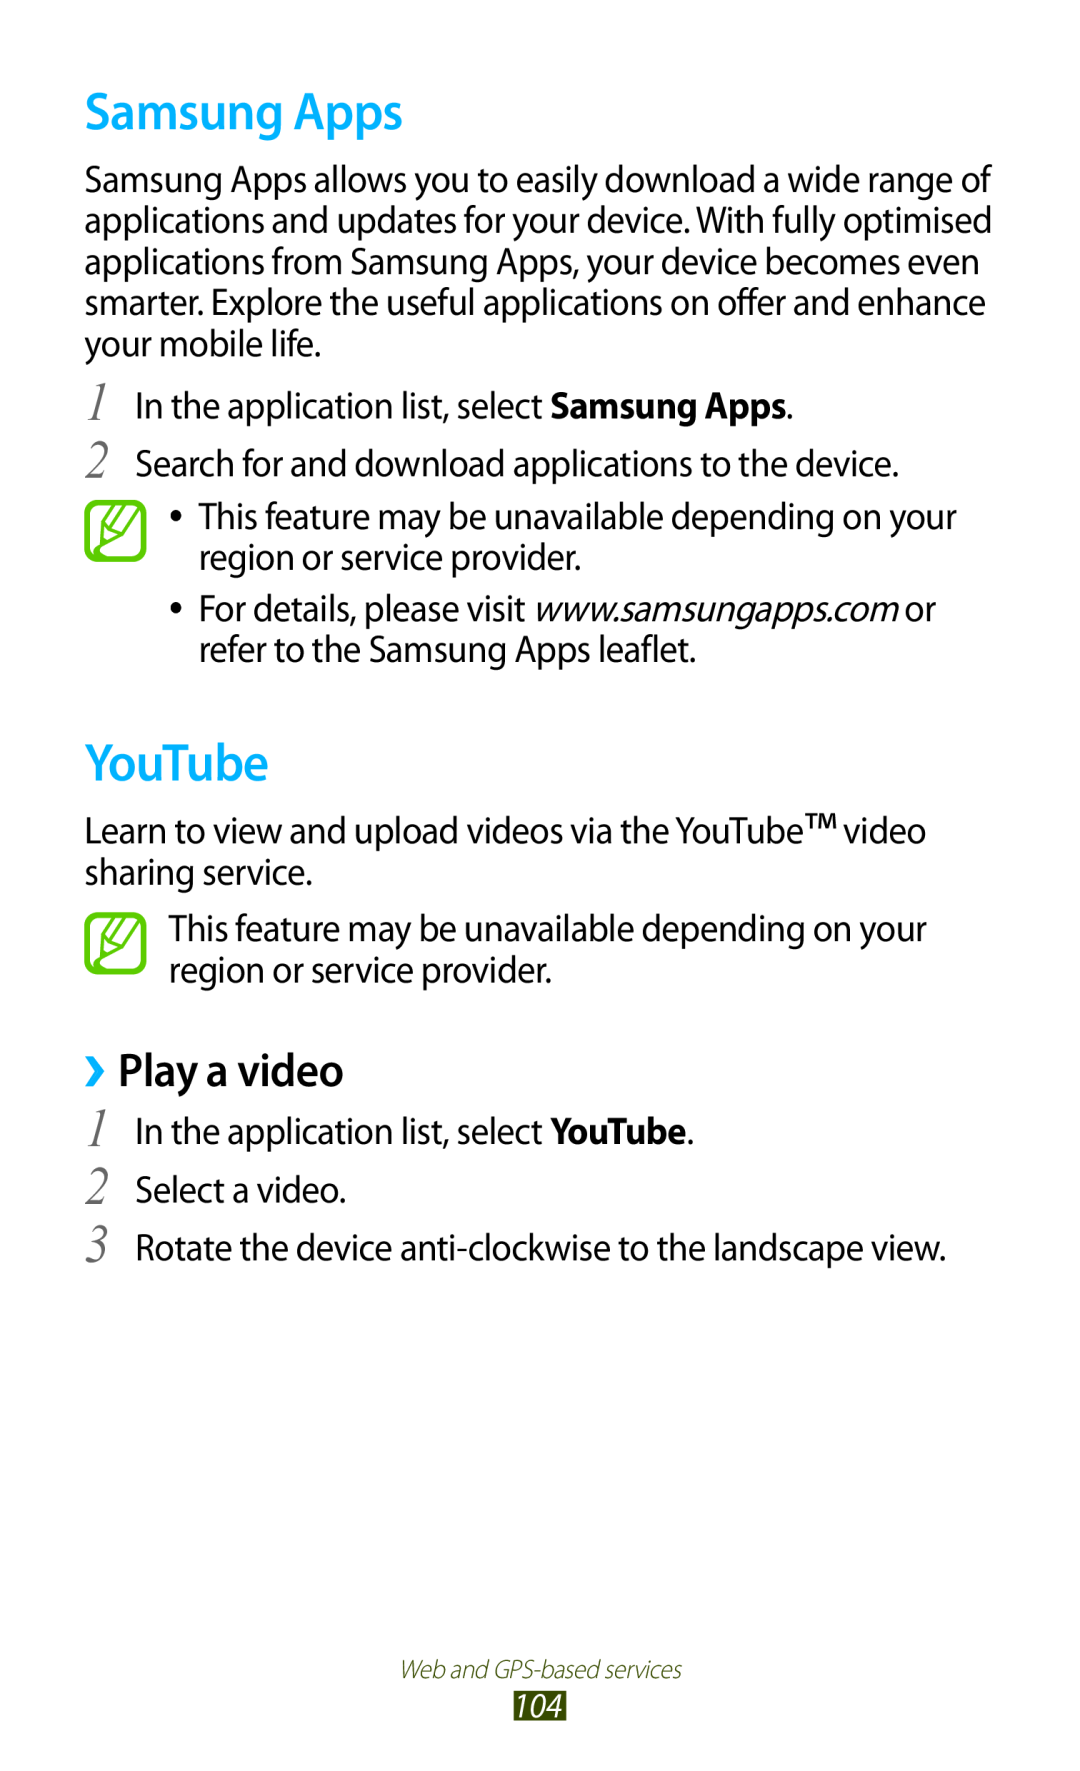 Samsung GT-S7560UWAATL, GT-S7560ZKAVDR, GT-S7560ZKAPRT, GT-S7560UWAWIN, GT-S7560UWAVDR Samsung Apps, YouTube, ››Play a video 